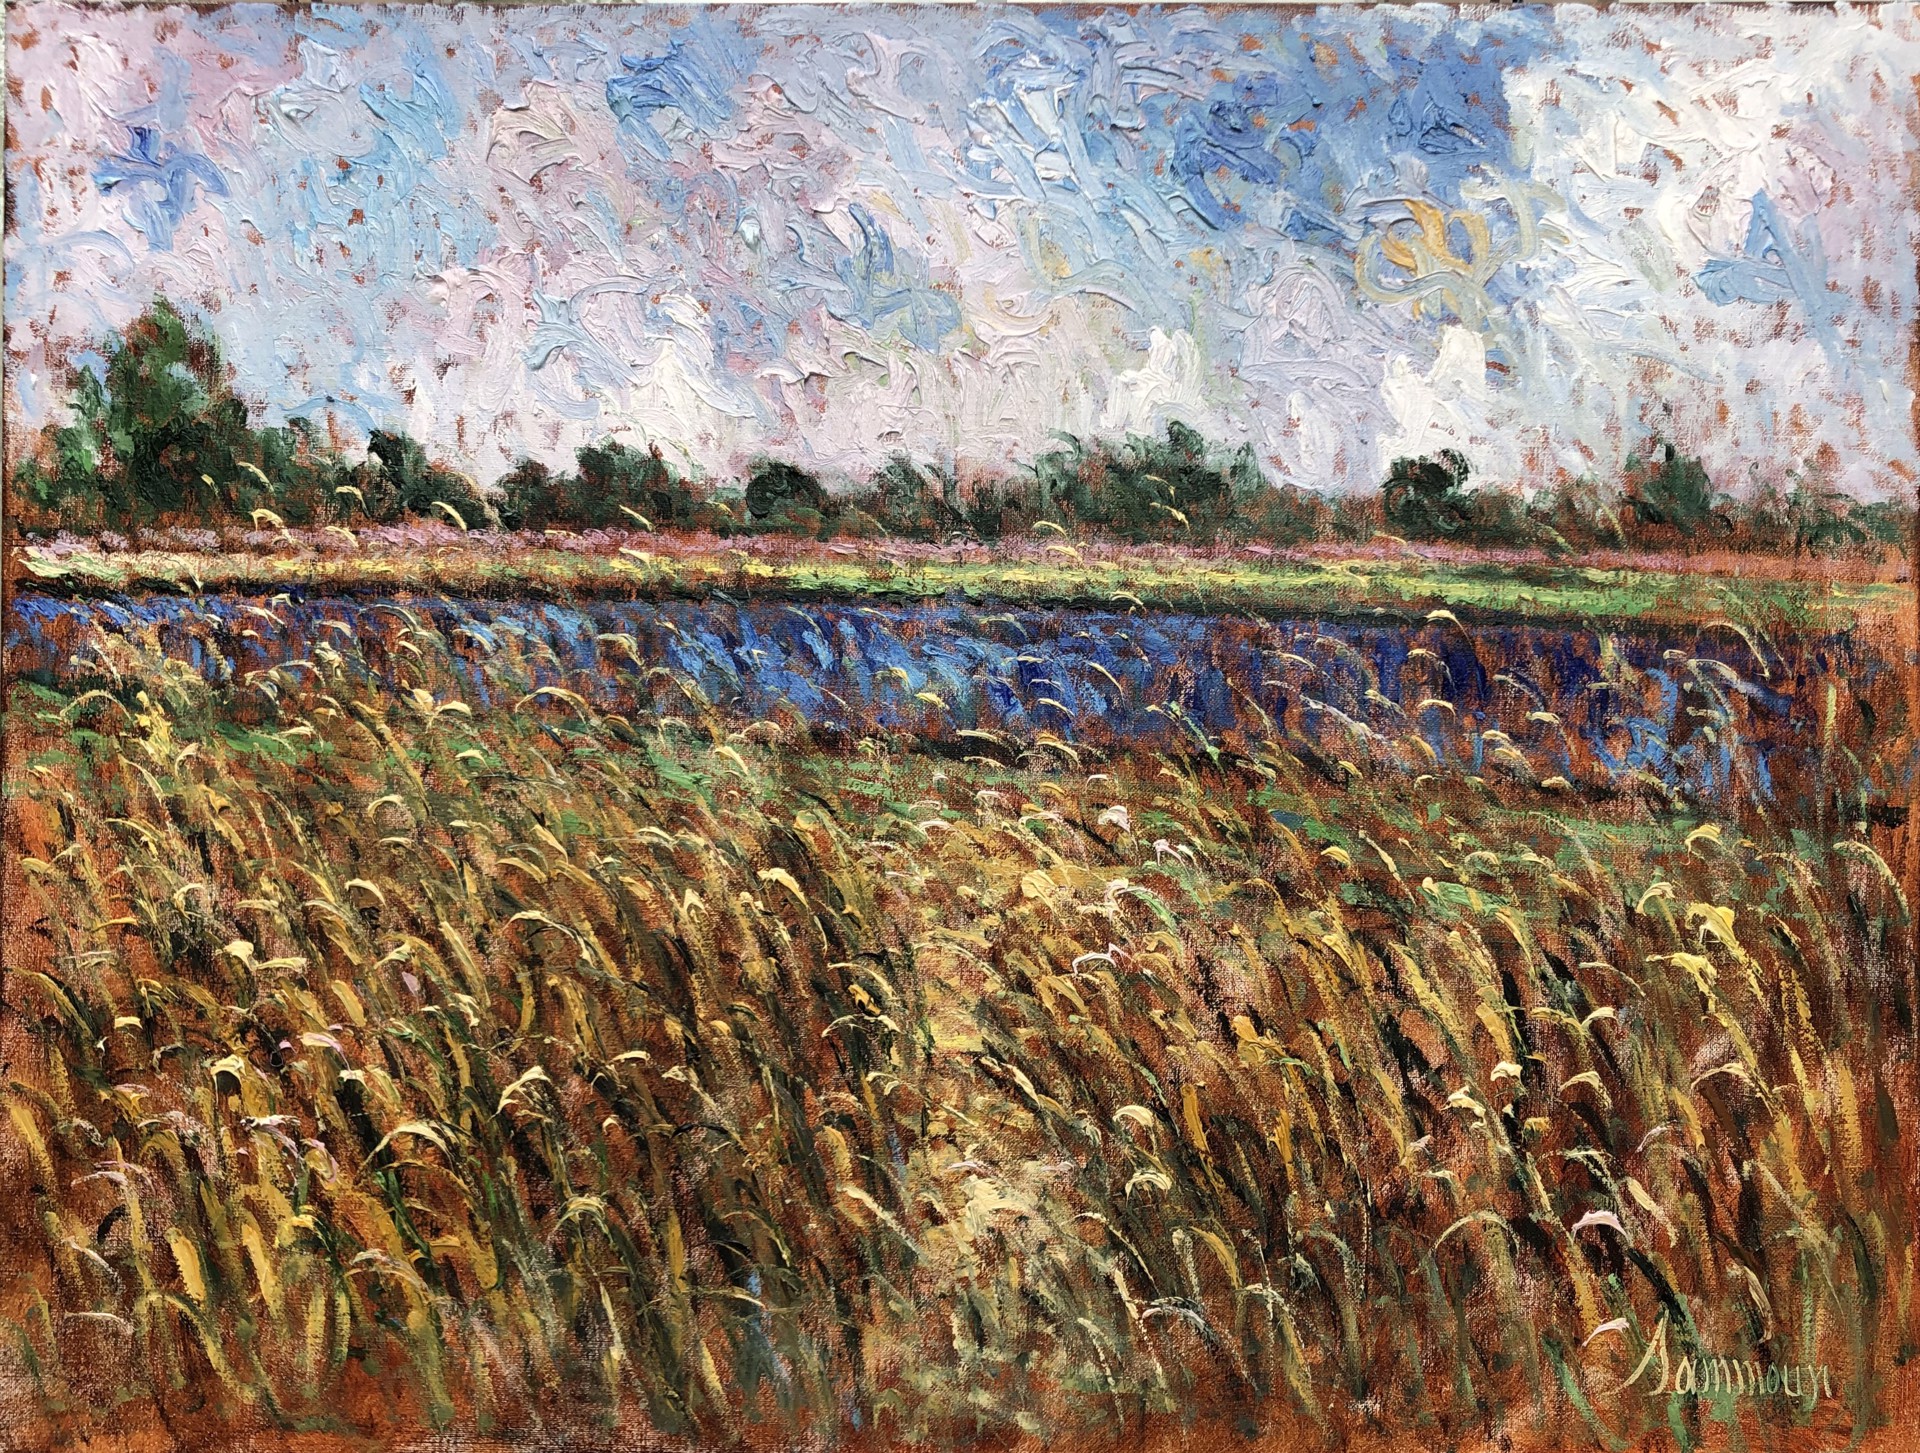 Champ de blé et le lac bleu by Samir Sammoun